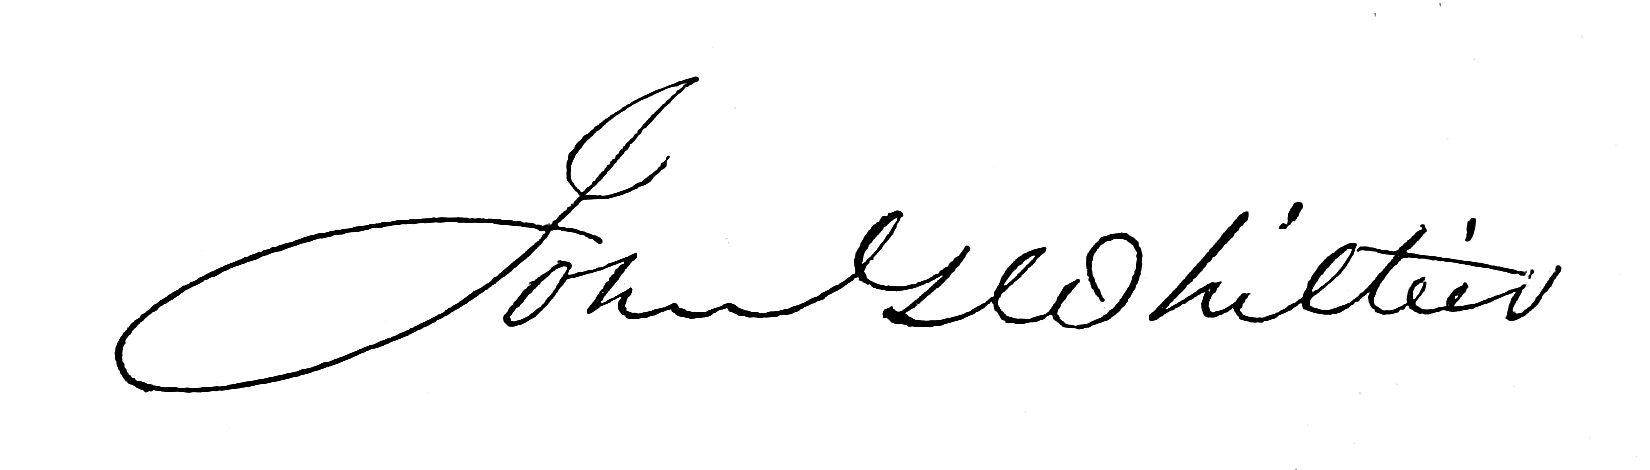 Signature of John G Whittier